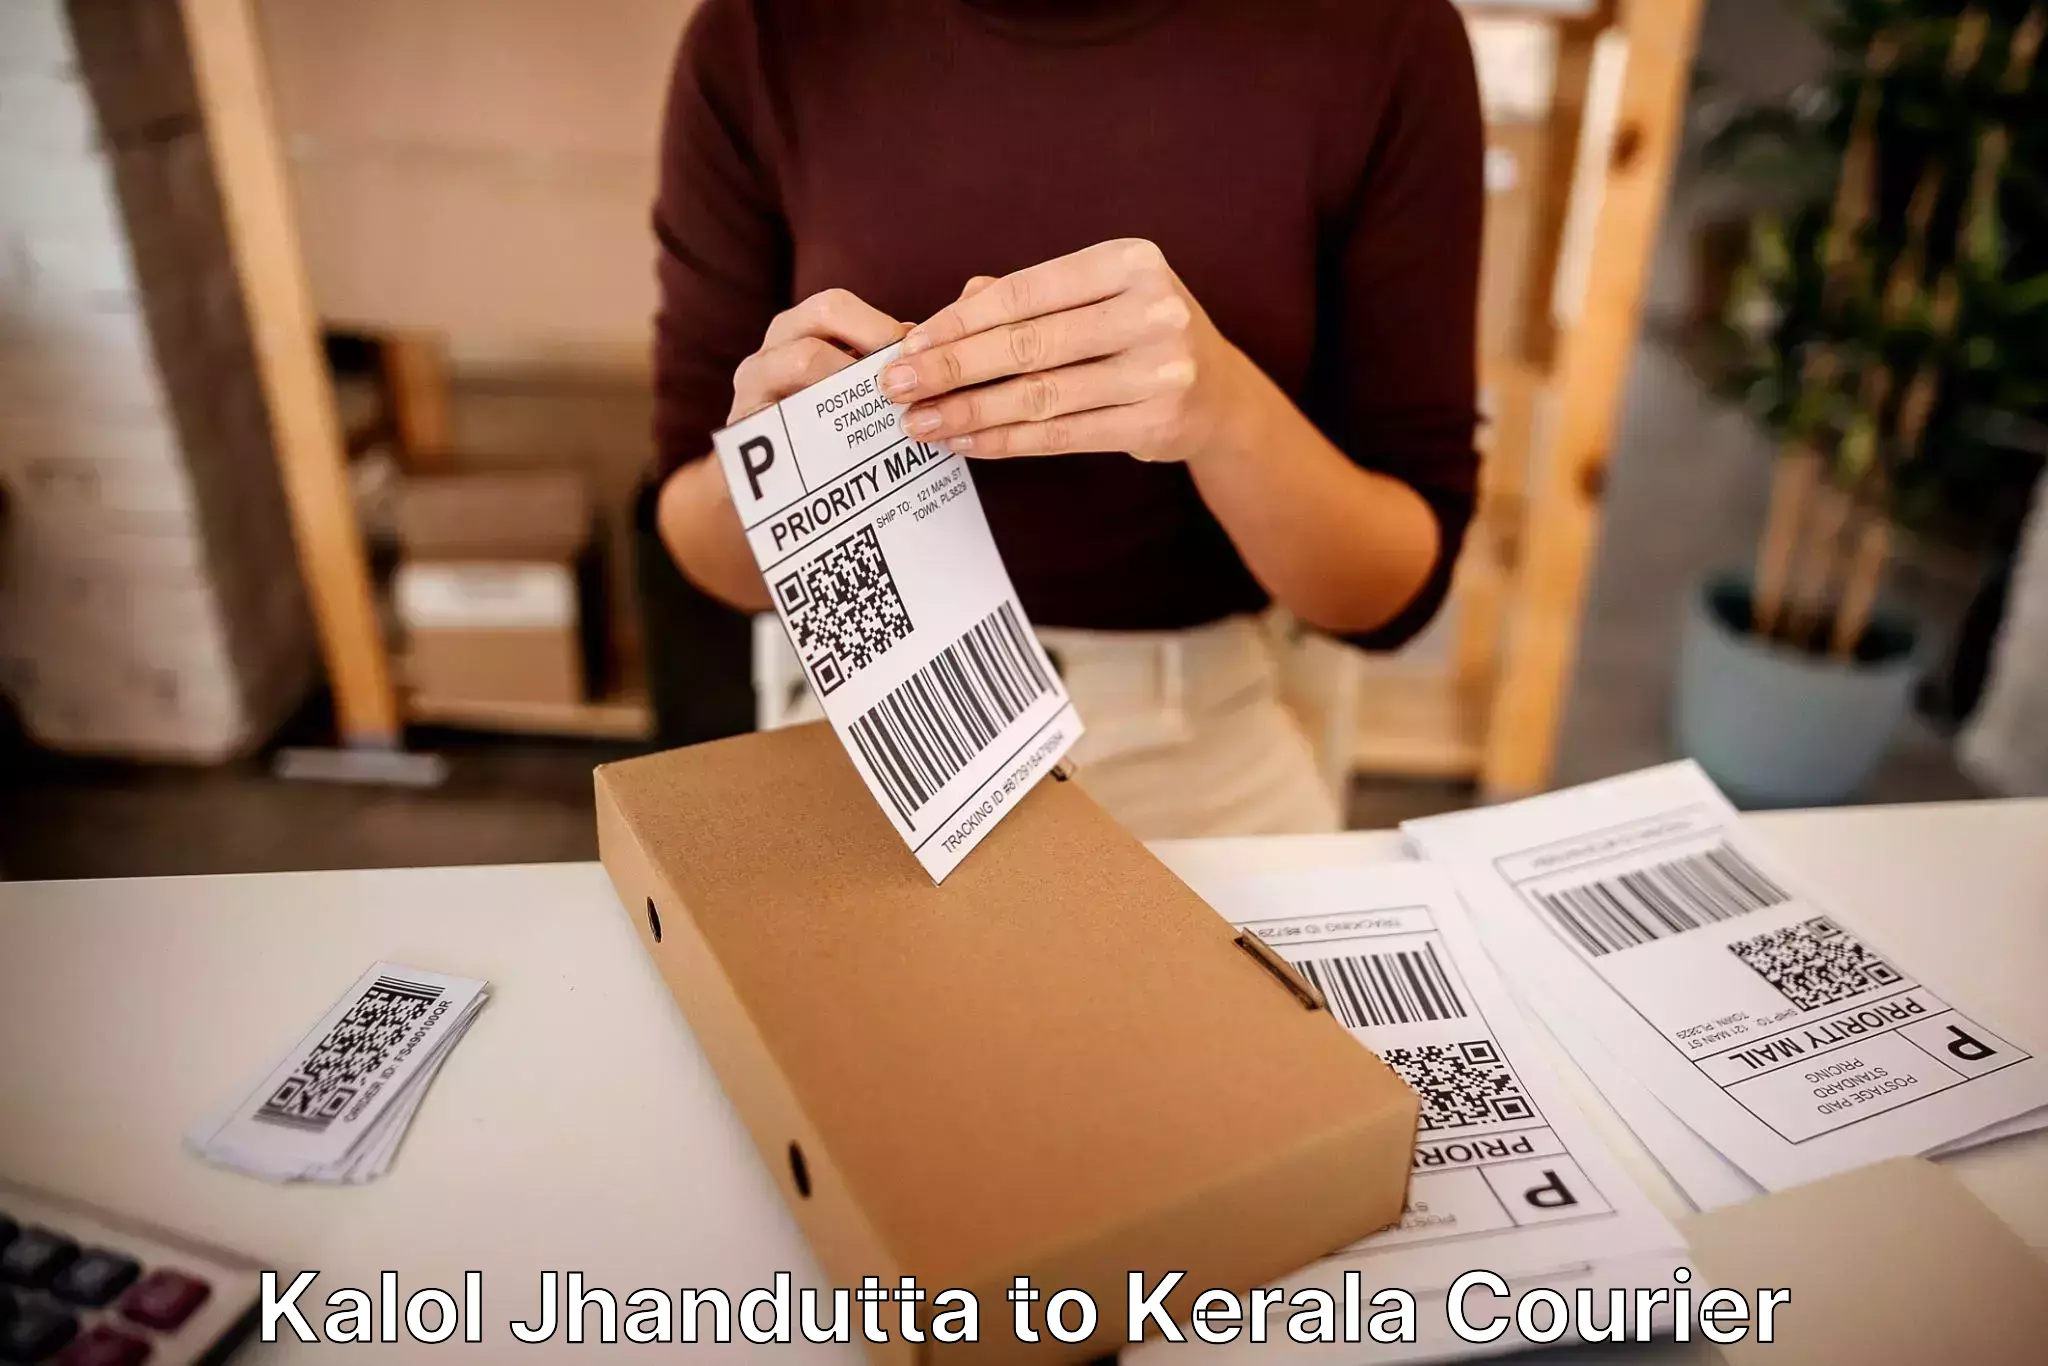 Household goods delivery Kalol Jhandutta to Koothattukulam